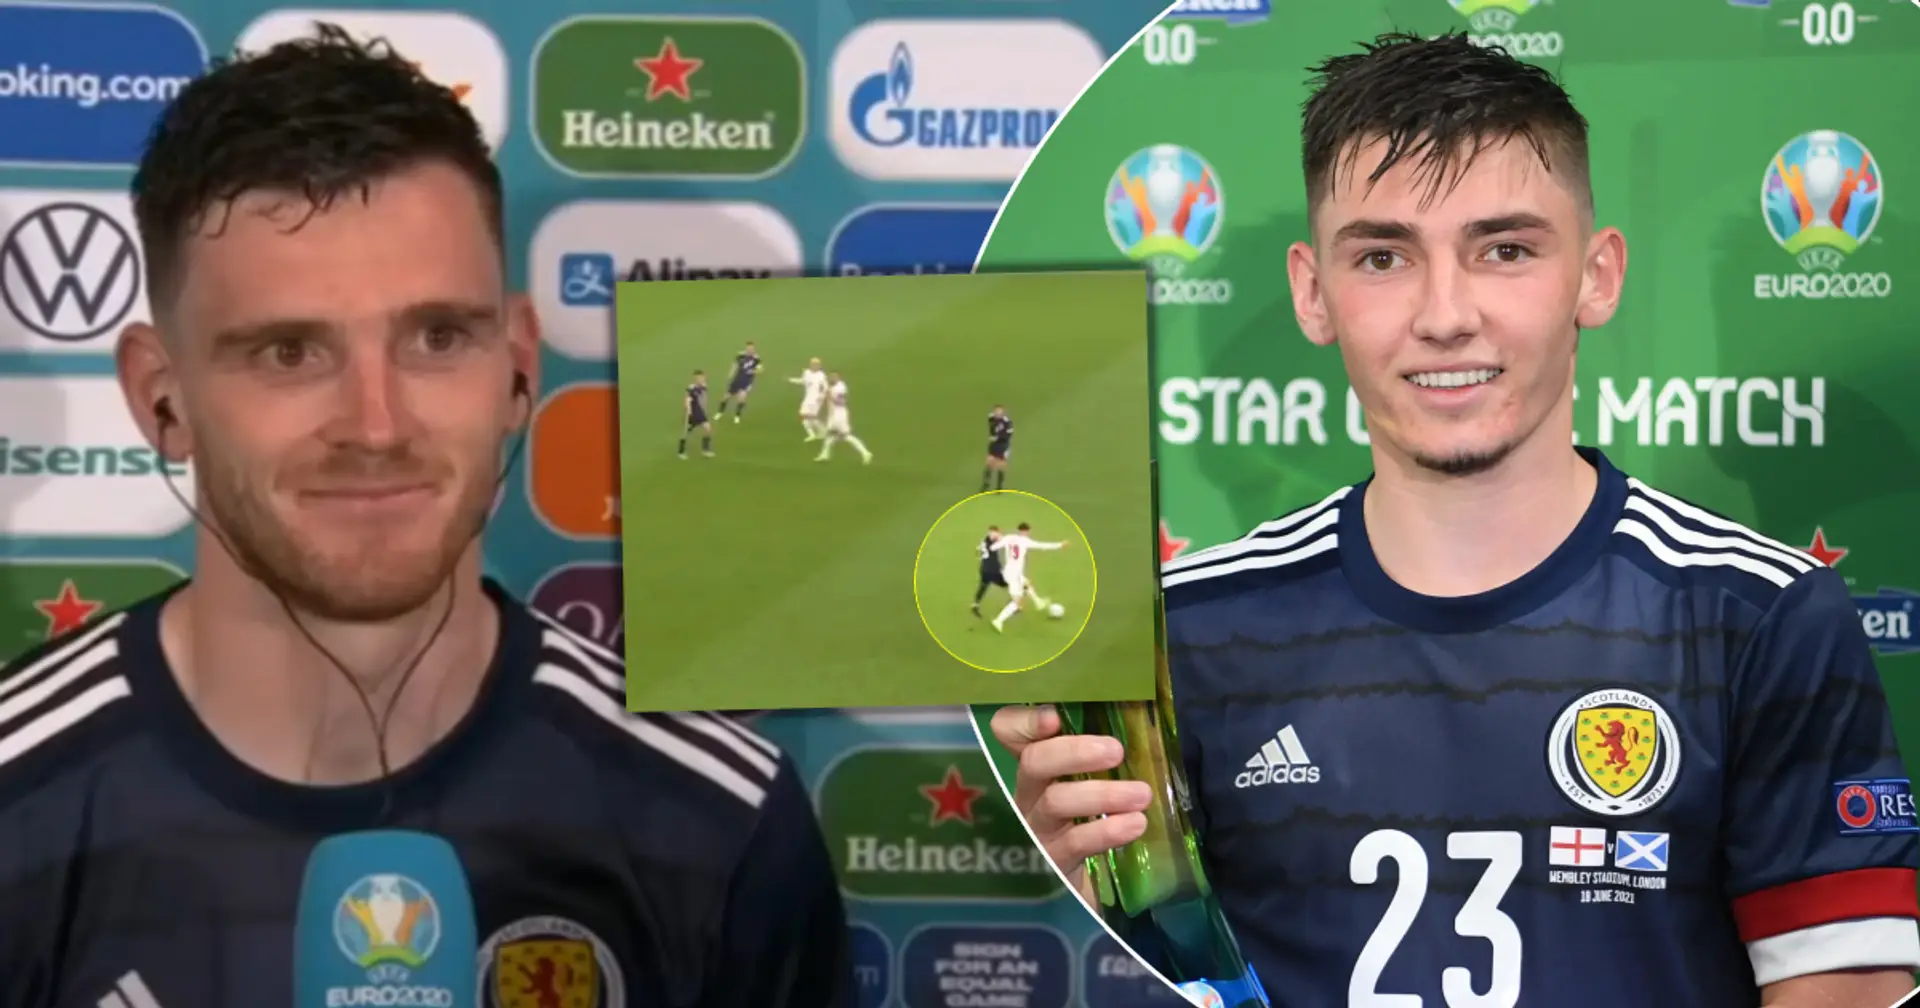 'Both were brilliant': Fan hopes Jurgen Klopp signs one of Scotland stars at Euro 2020